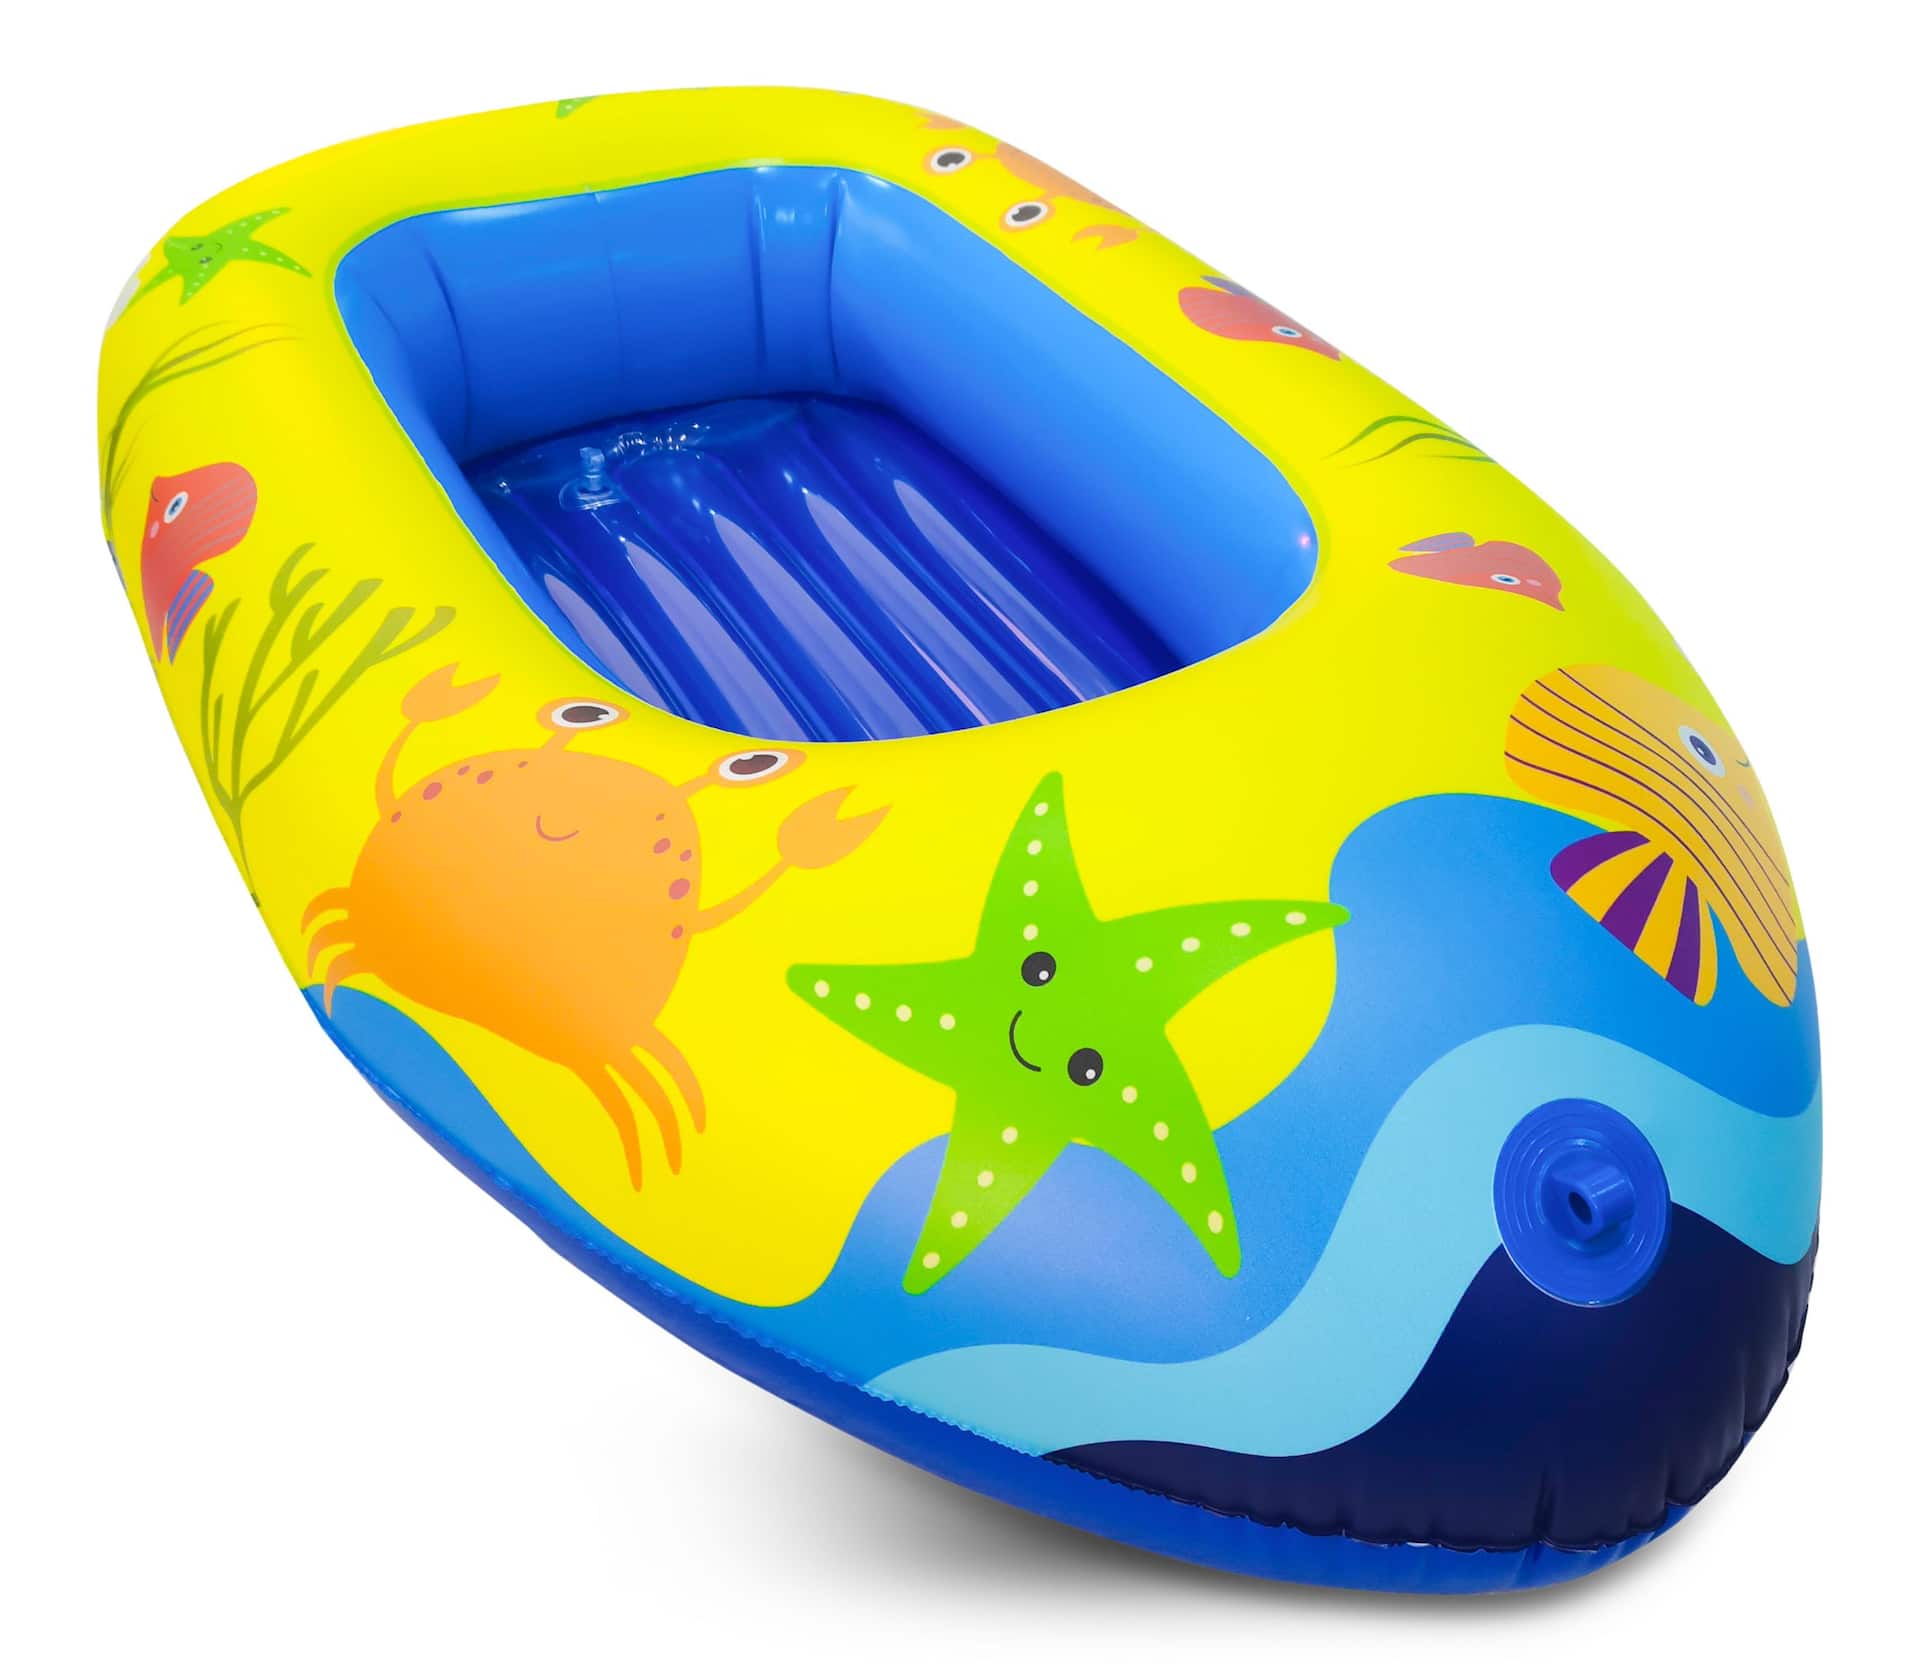 Stella & Finn Kids' Inflatable Lightweight Pool Beach Water Boat